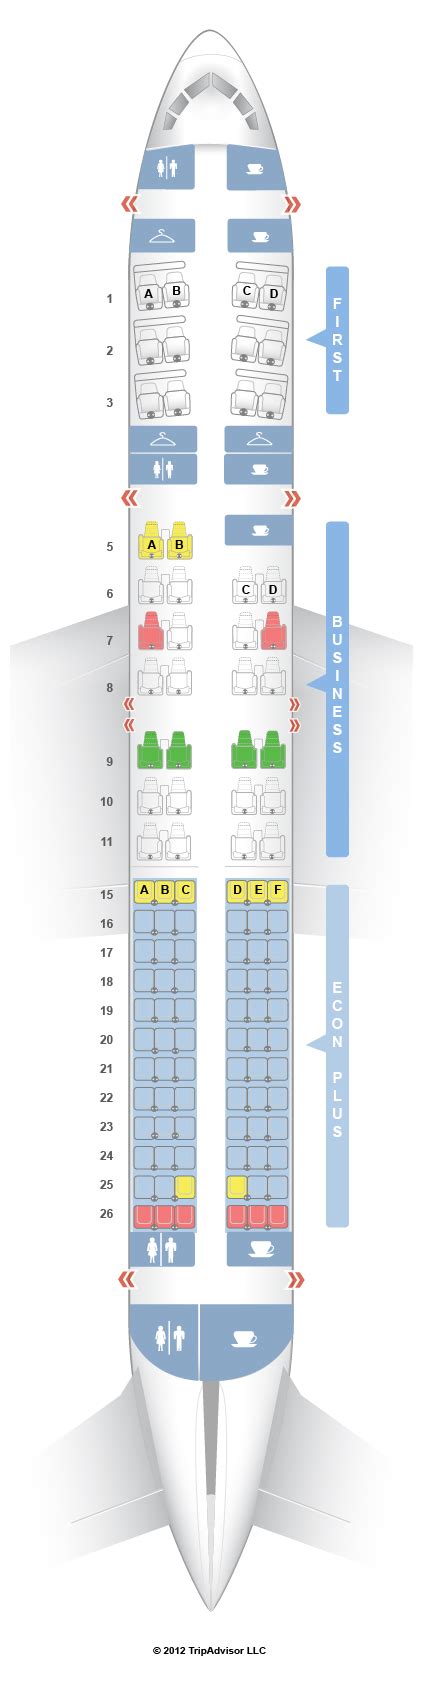 Seatguru Seat Map